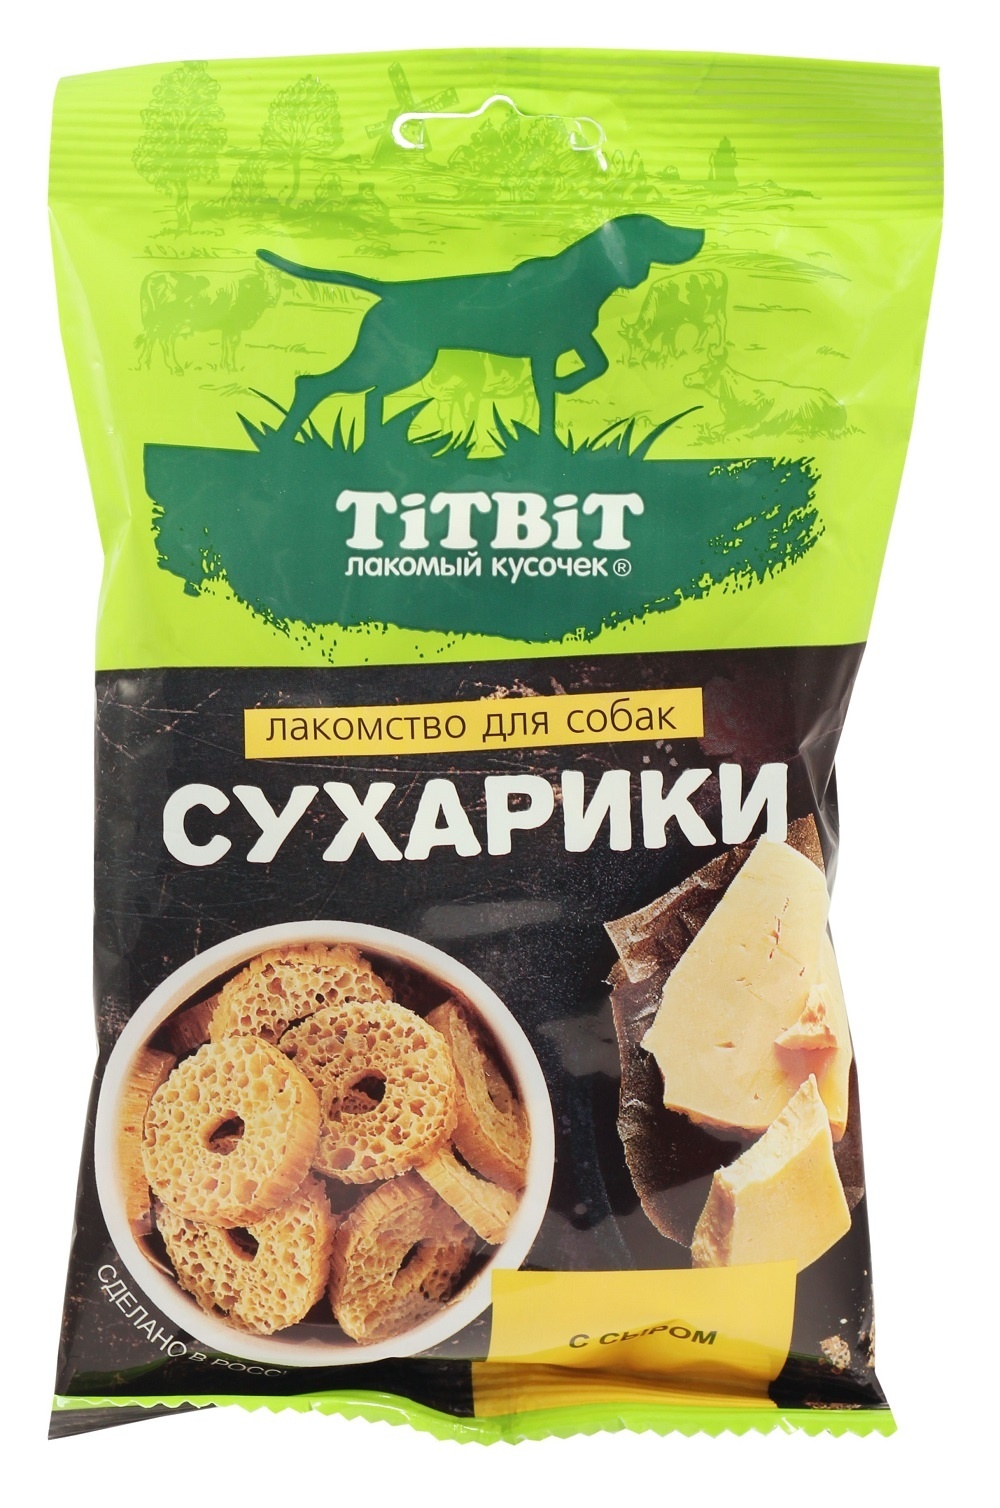 TiTBiT TiTBiT сухарики с сыром, лакомство для собак (55 г) titbit titbit сухарики со вкусом бекона лакомство для собак 55 г